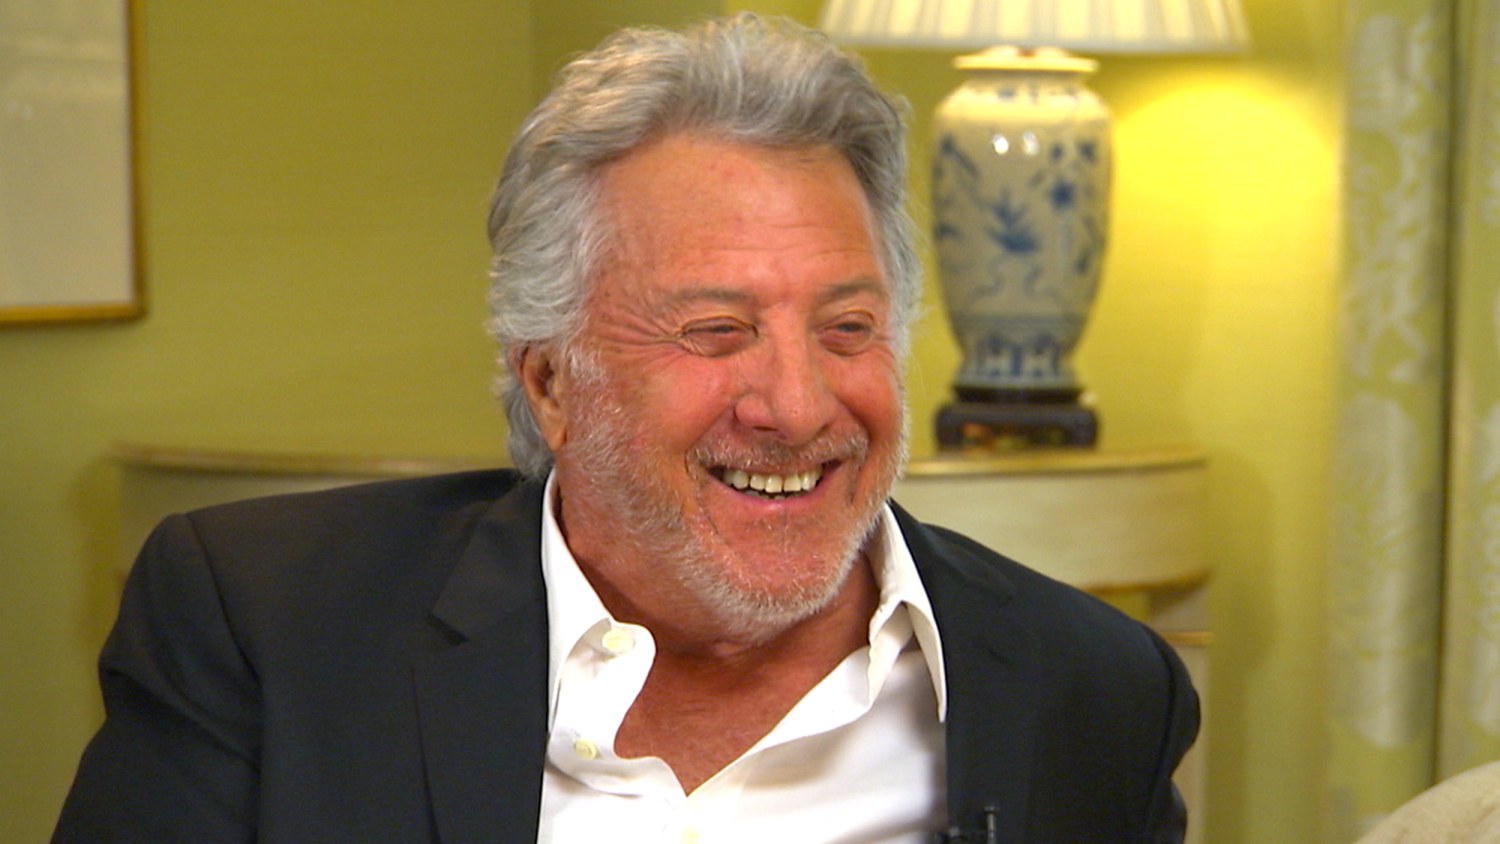 Dustin Hoffman's son Jake reveals sweet story behind his 'fighting